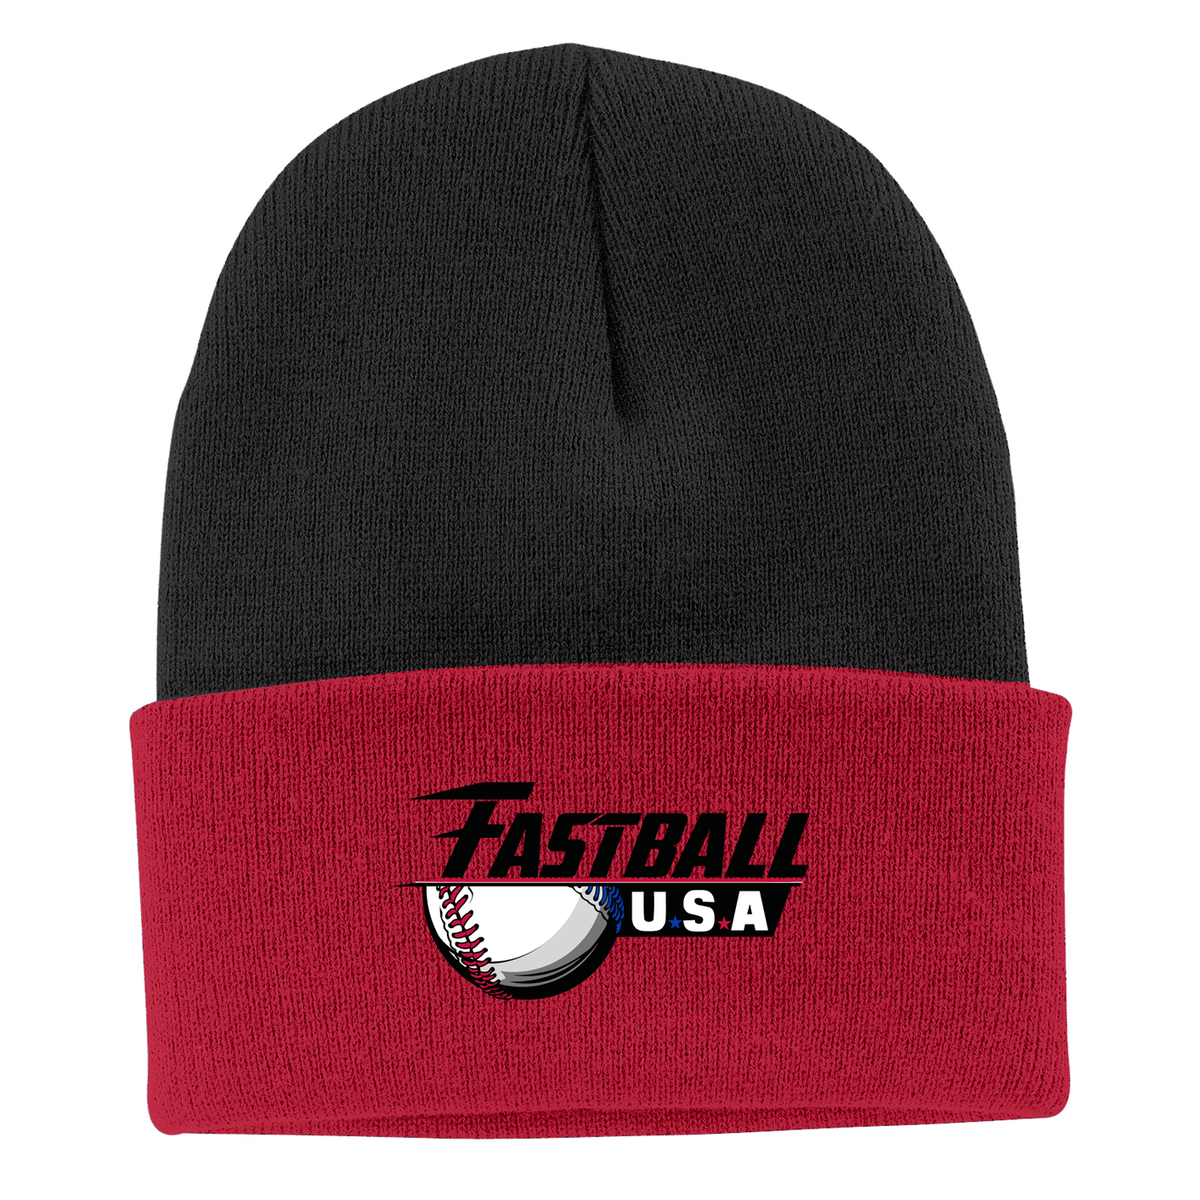 Fastball USA Academy Baseball Knit Beanie